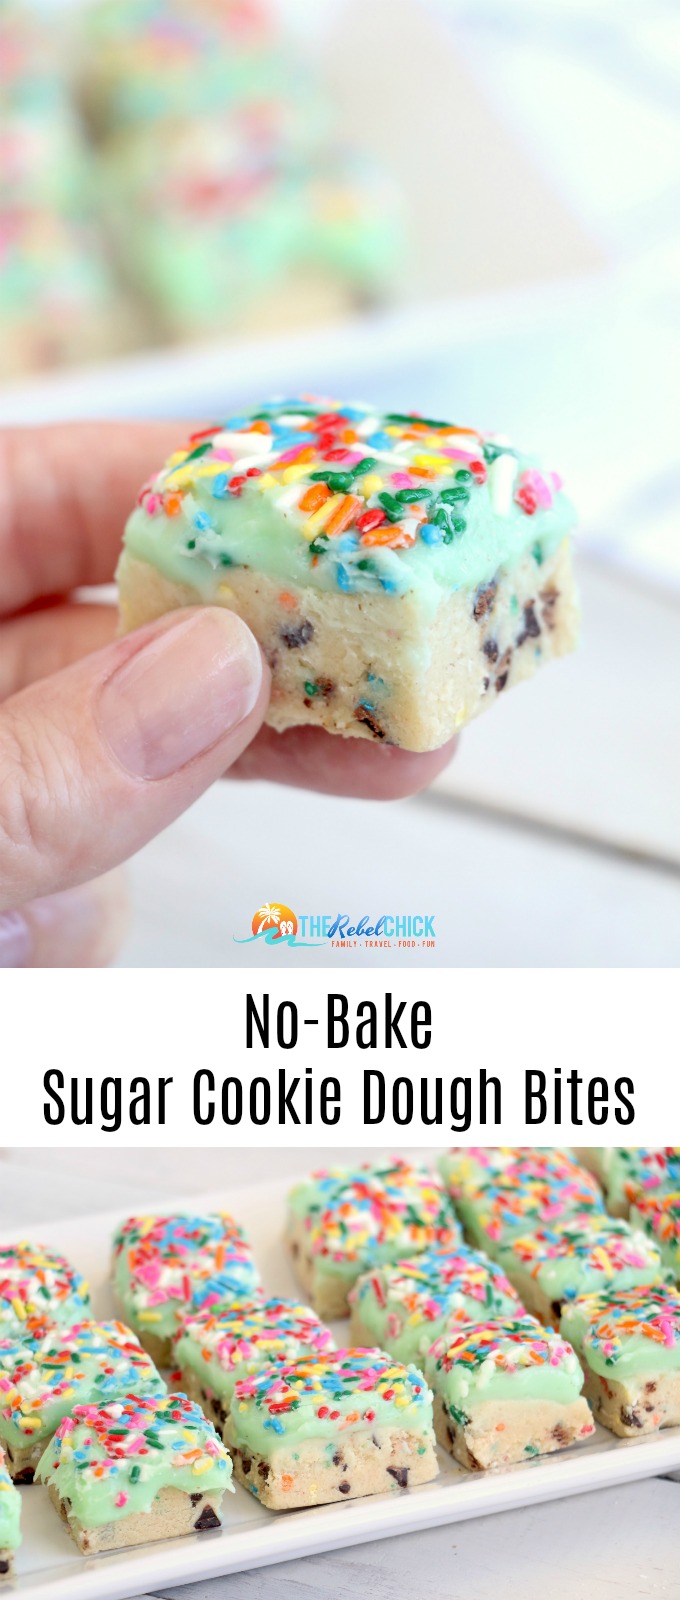 No-Bake Cookie Dough Bites Recipe